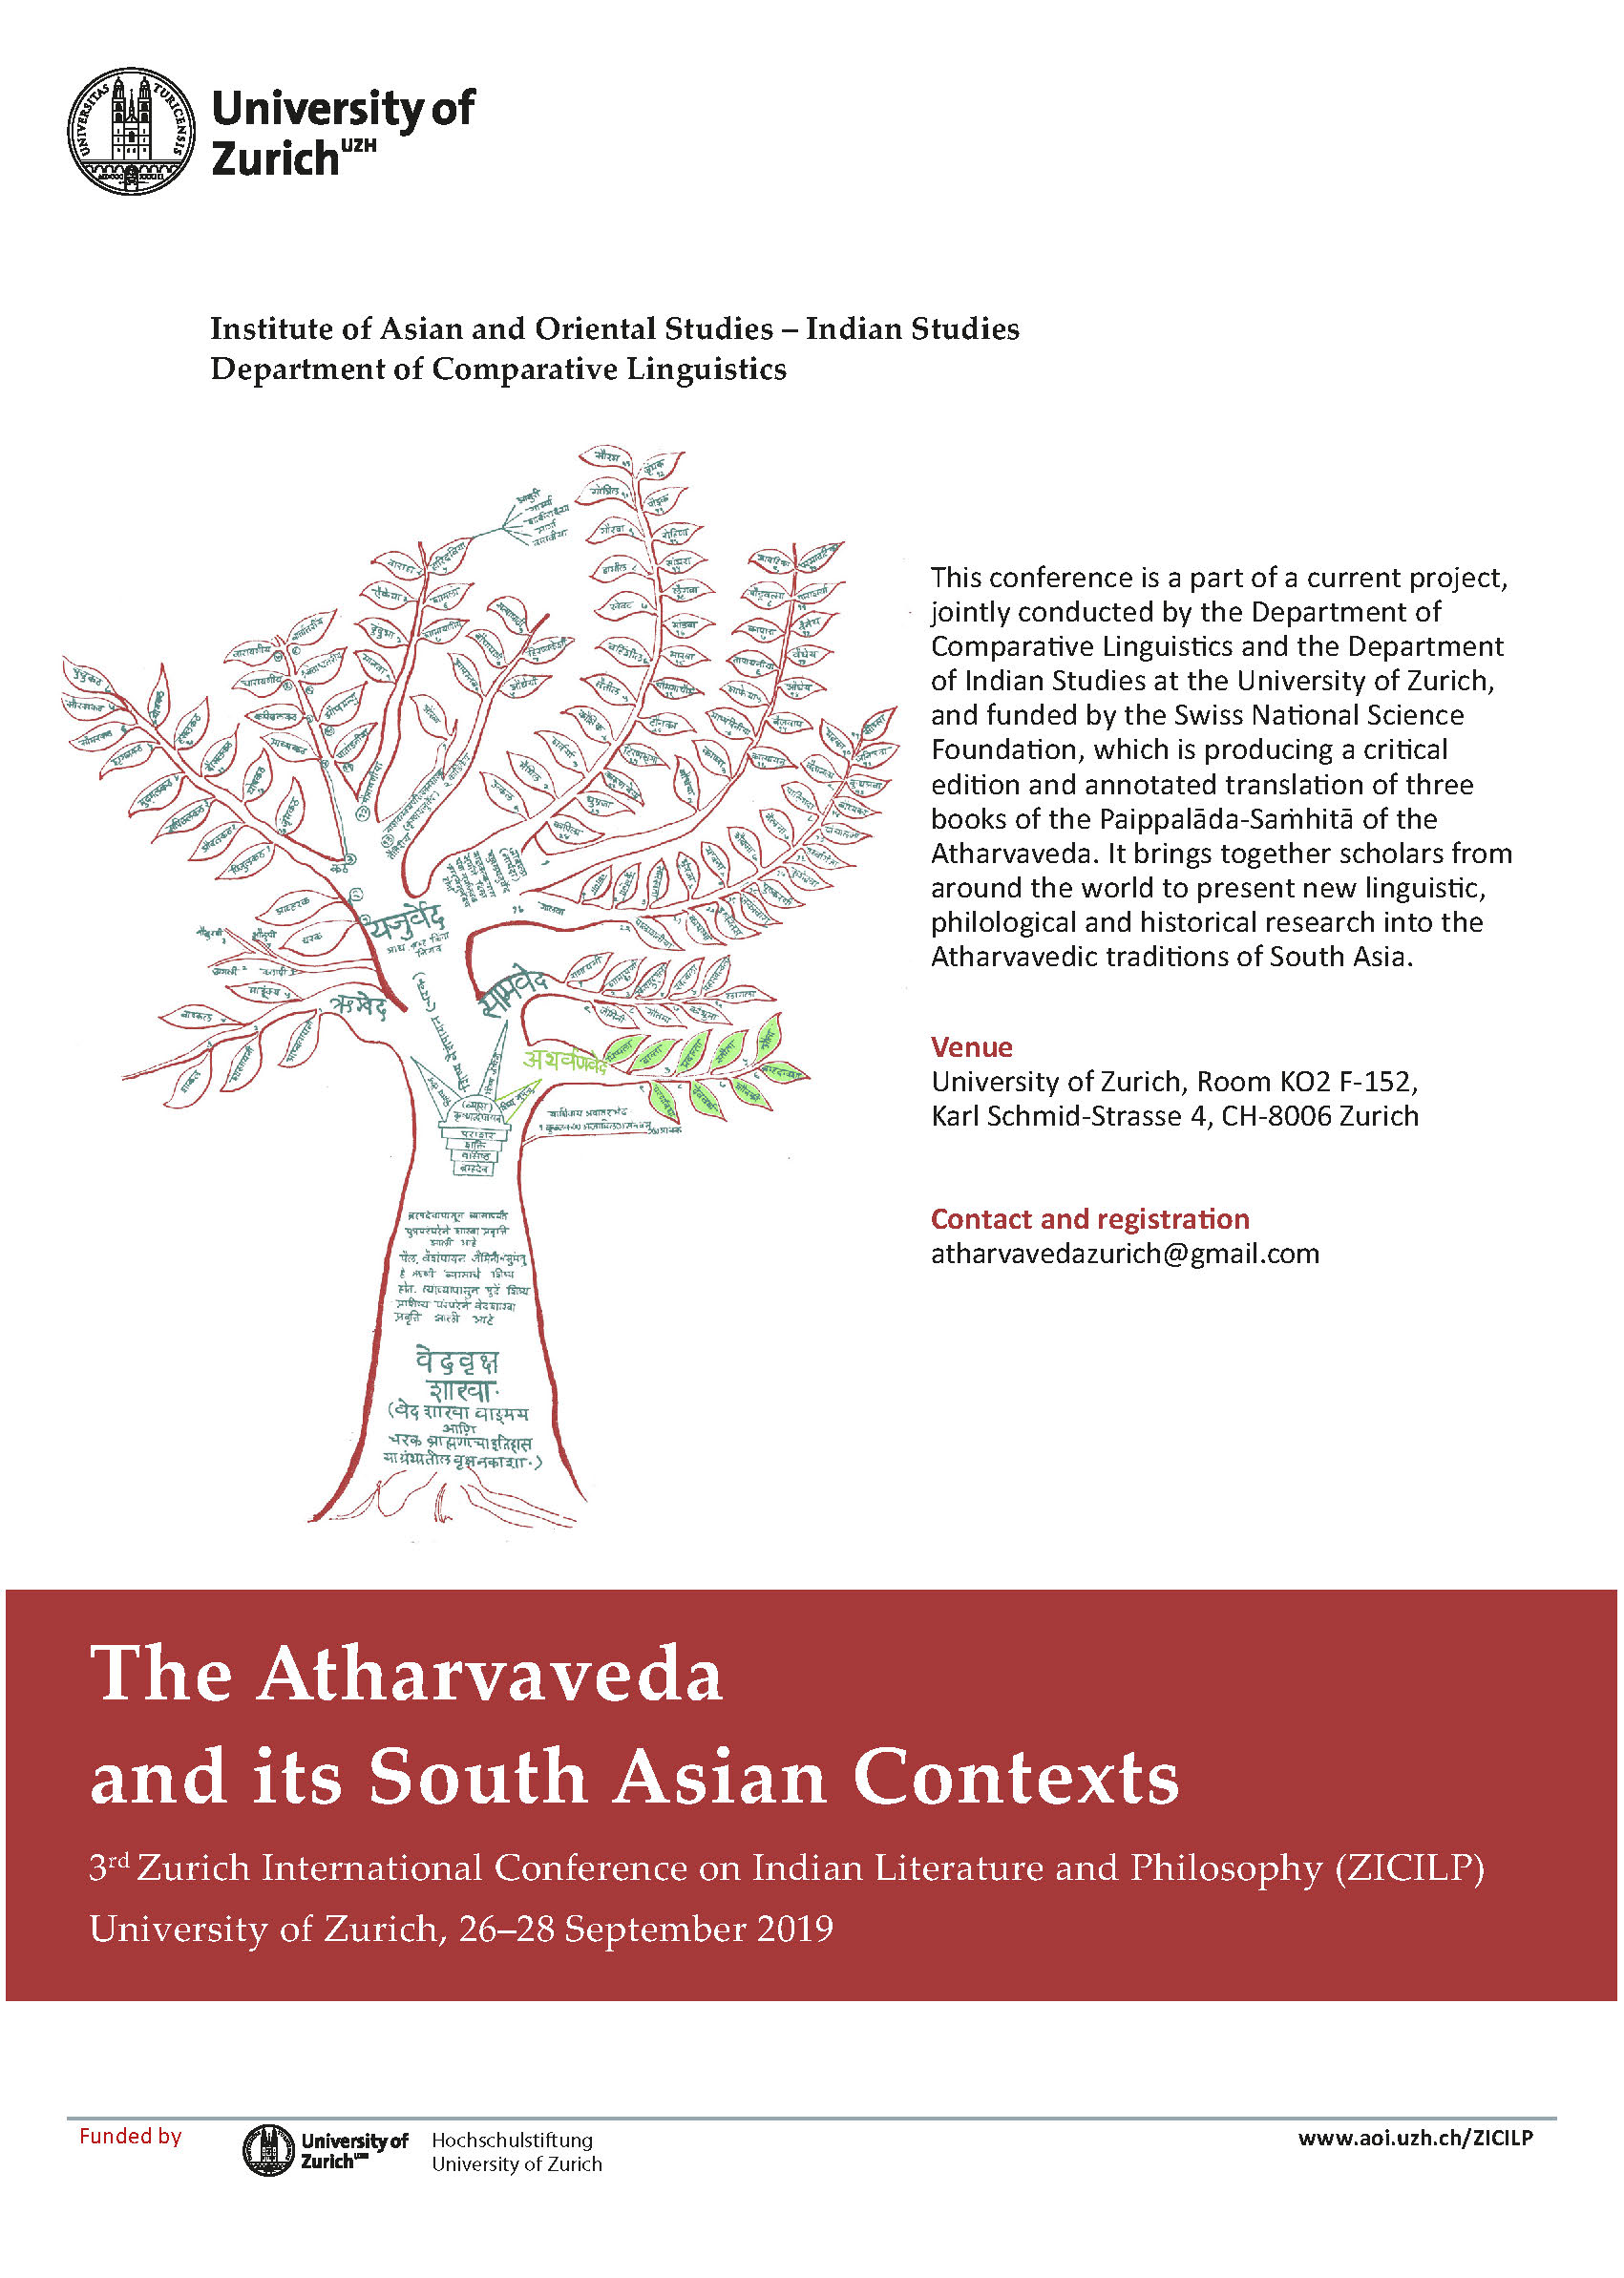 The Atharvaveda and its South Asian Contexts